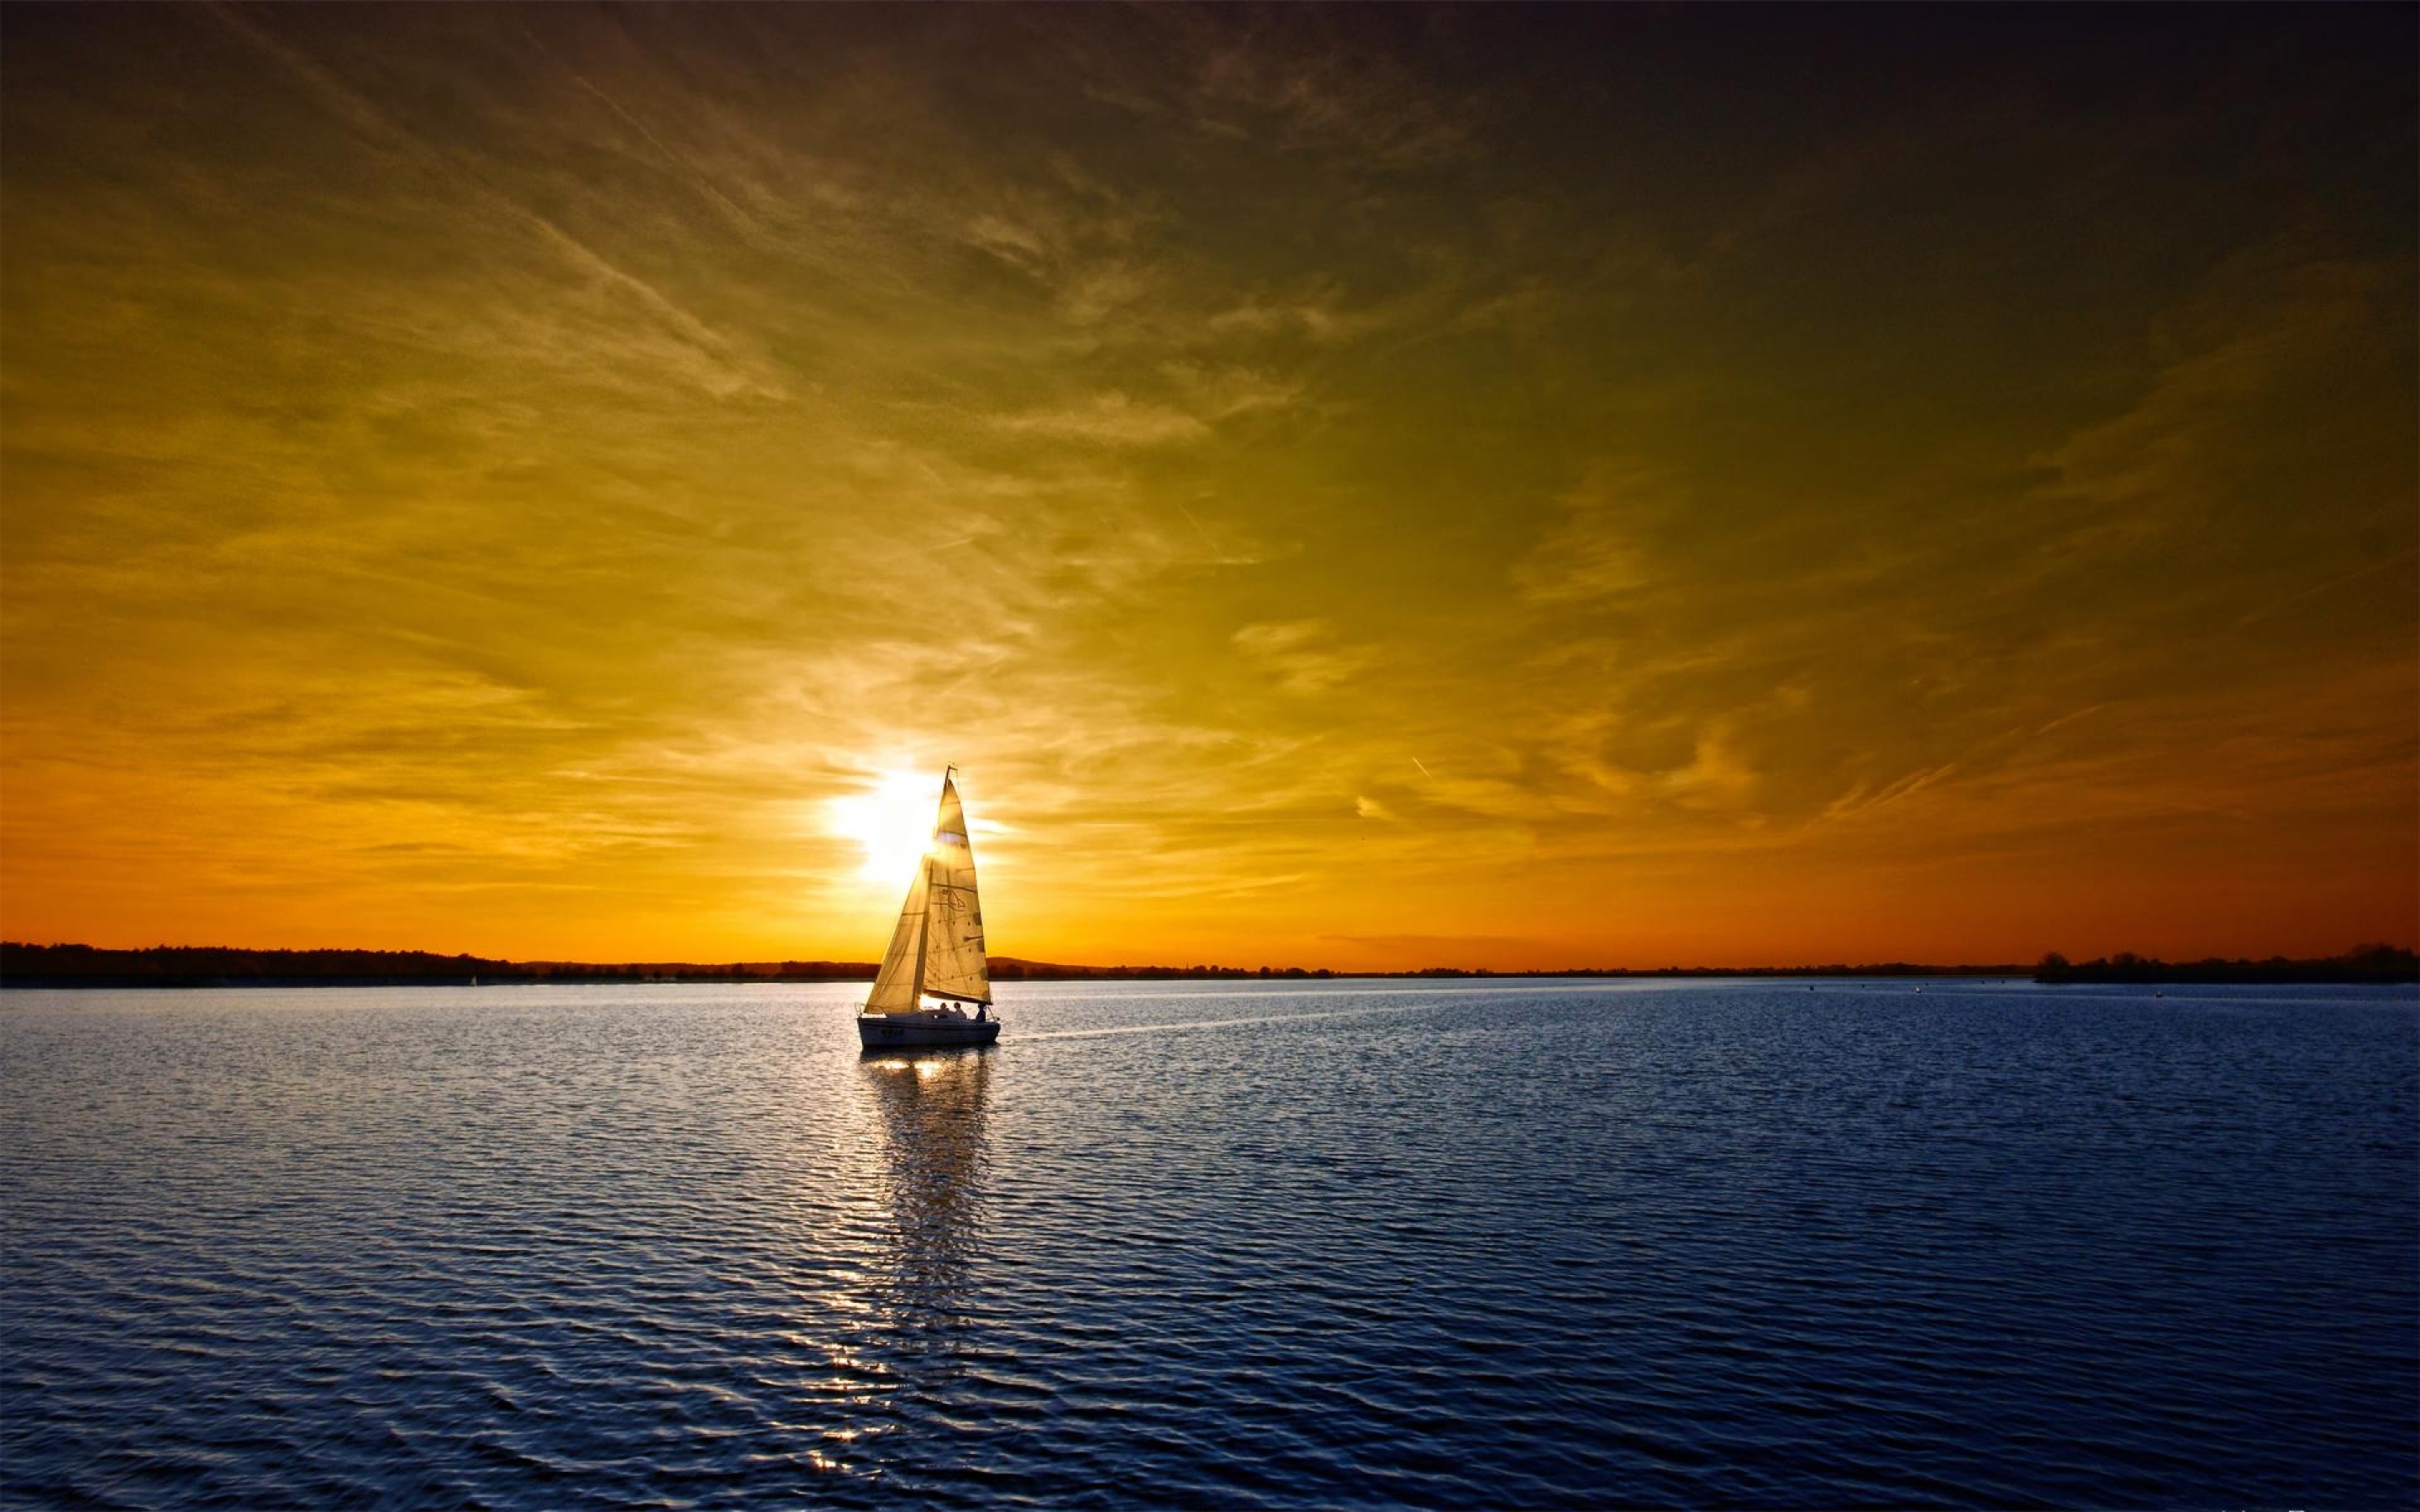 sailboat at sunset images